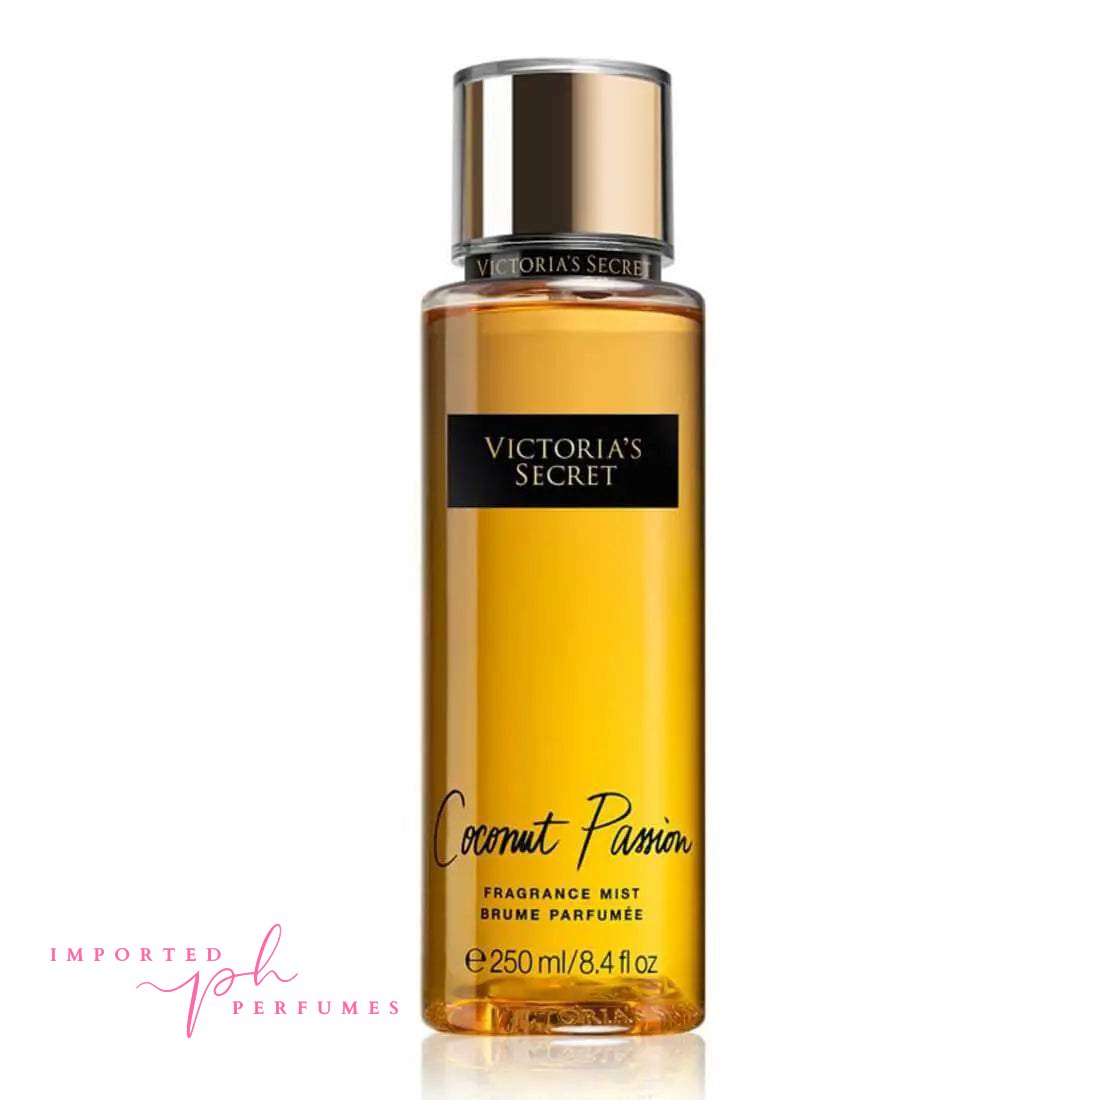 Victoria's Secret Coconut Passion Fragrance Mist 250ml-Imported Perfumes Co-for women,Victoria,Victoria Secret,women,Women perfume